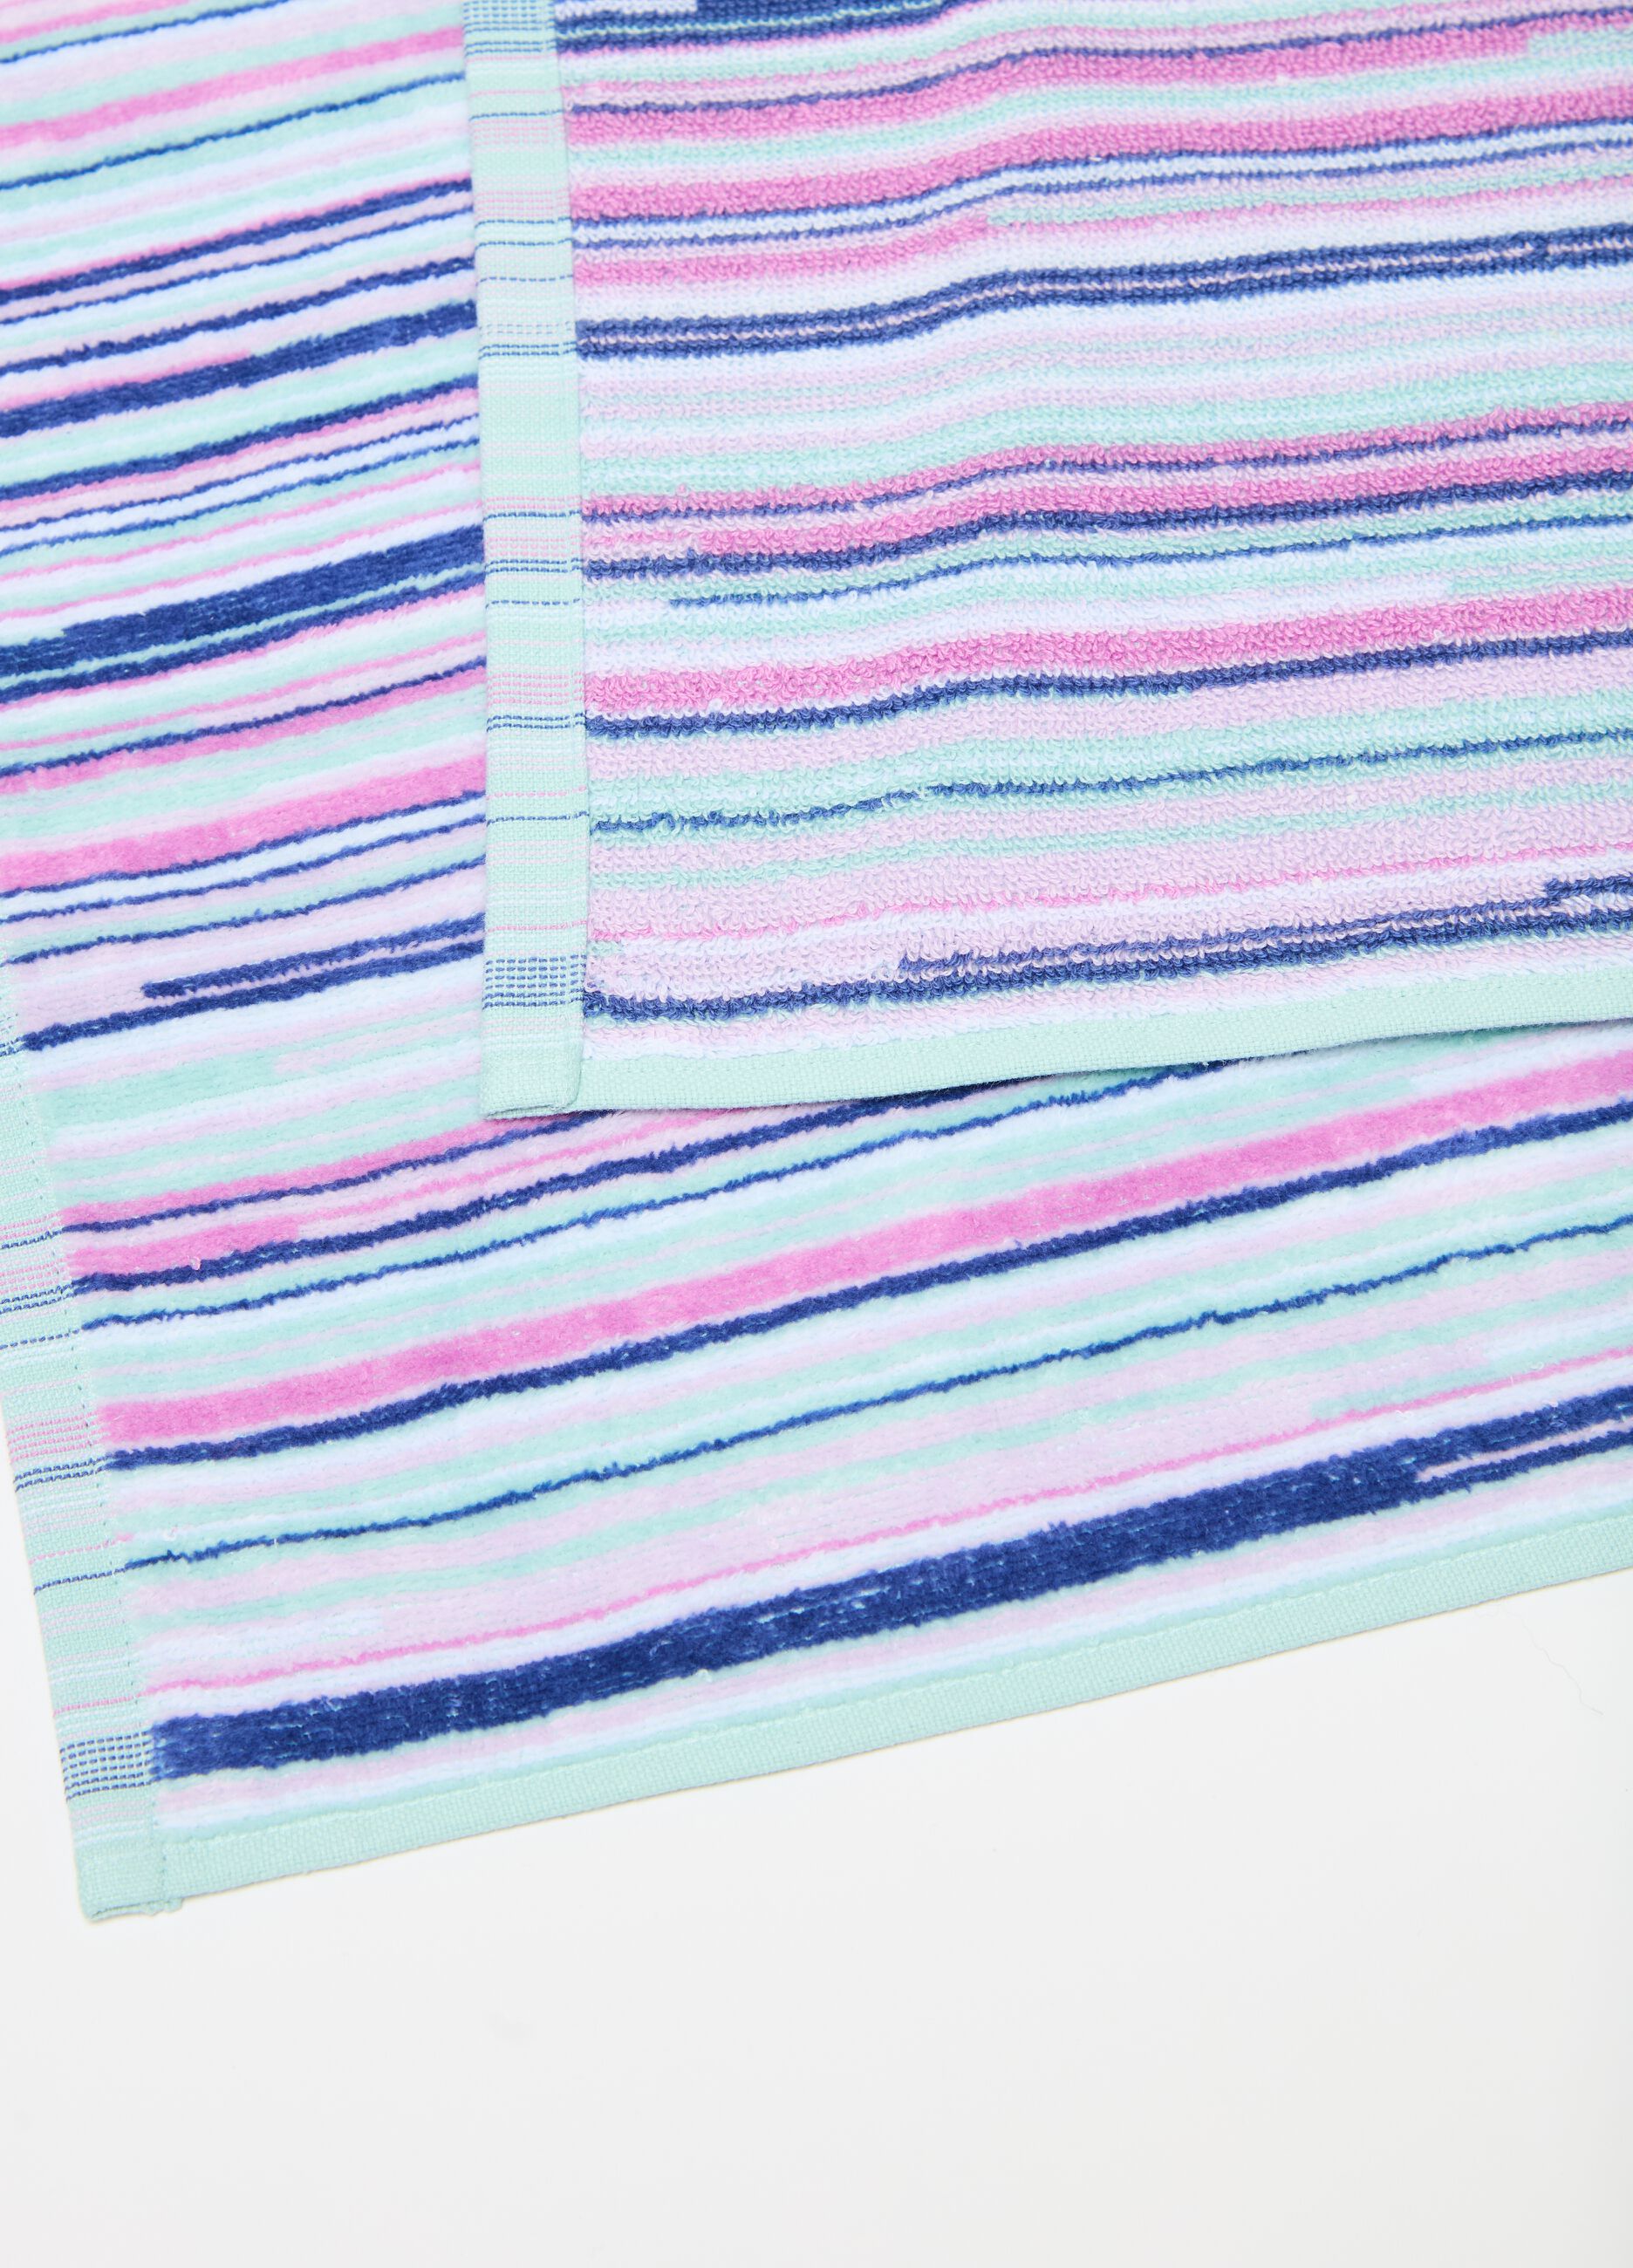 Bath towel with striped pattern